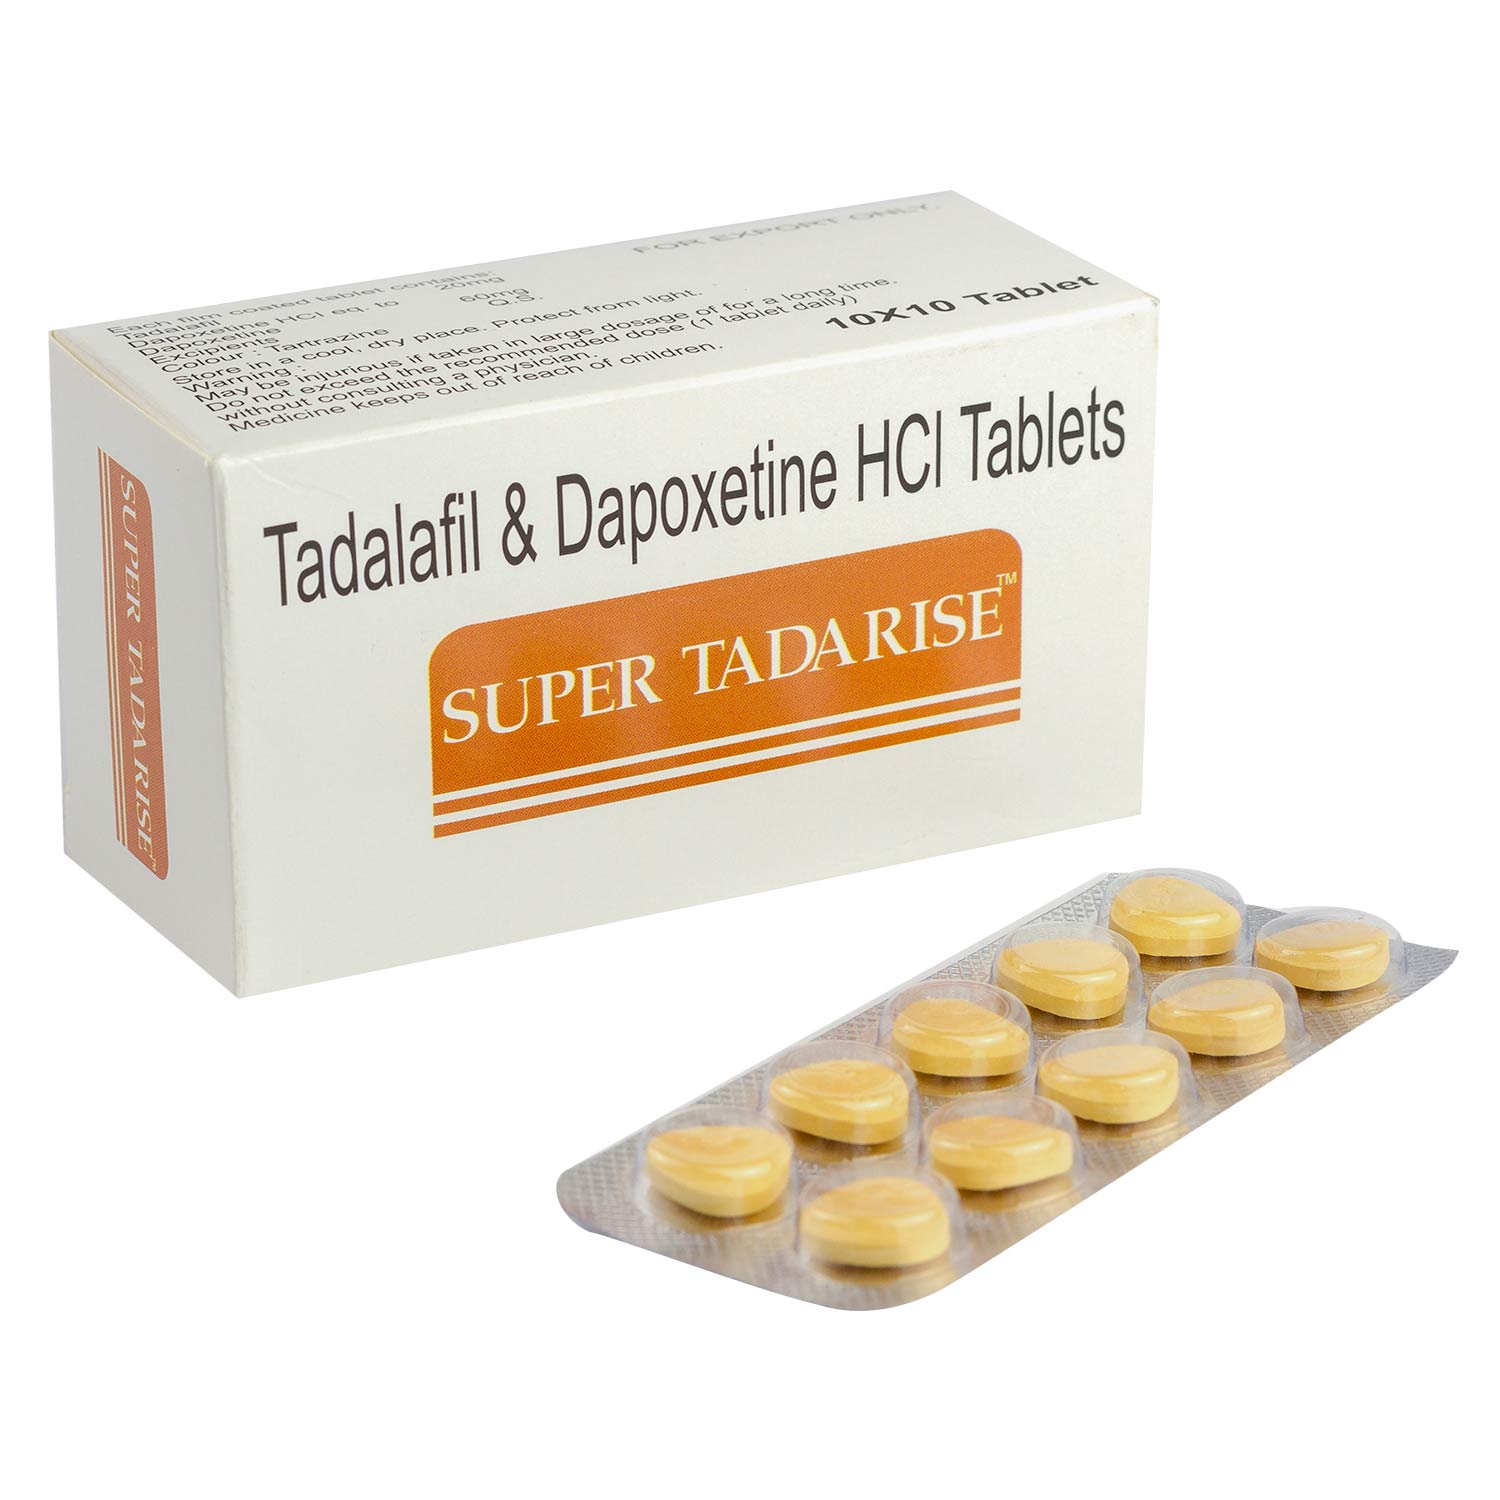 Super-Tadarise-1-1500x1500.jpg